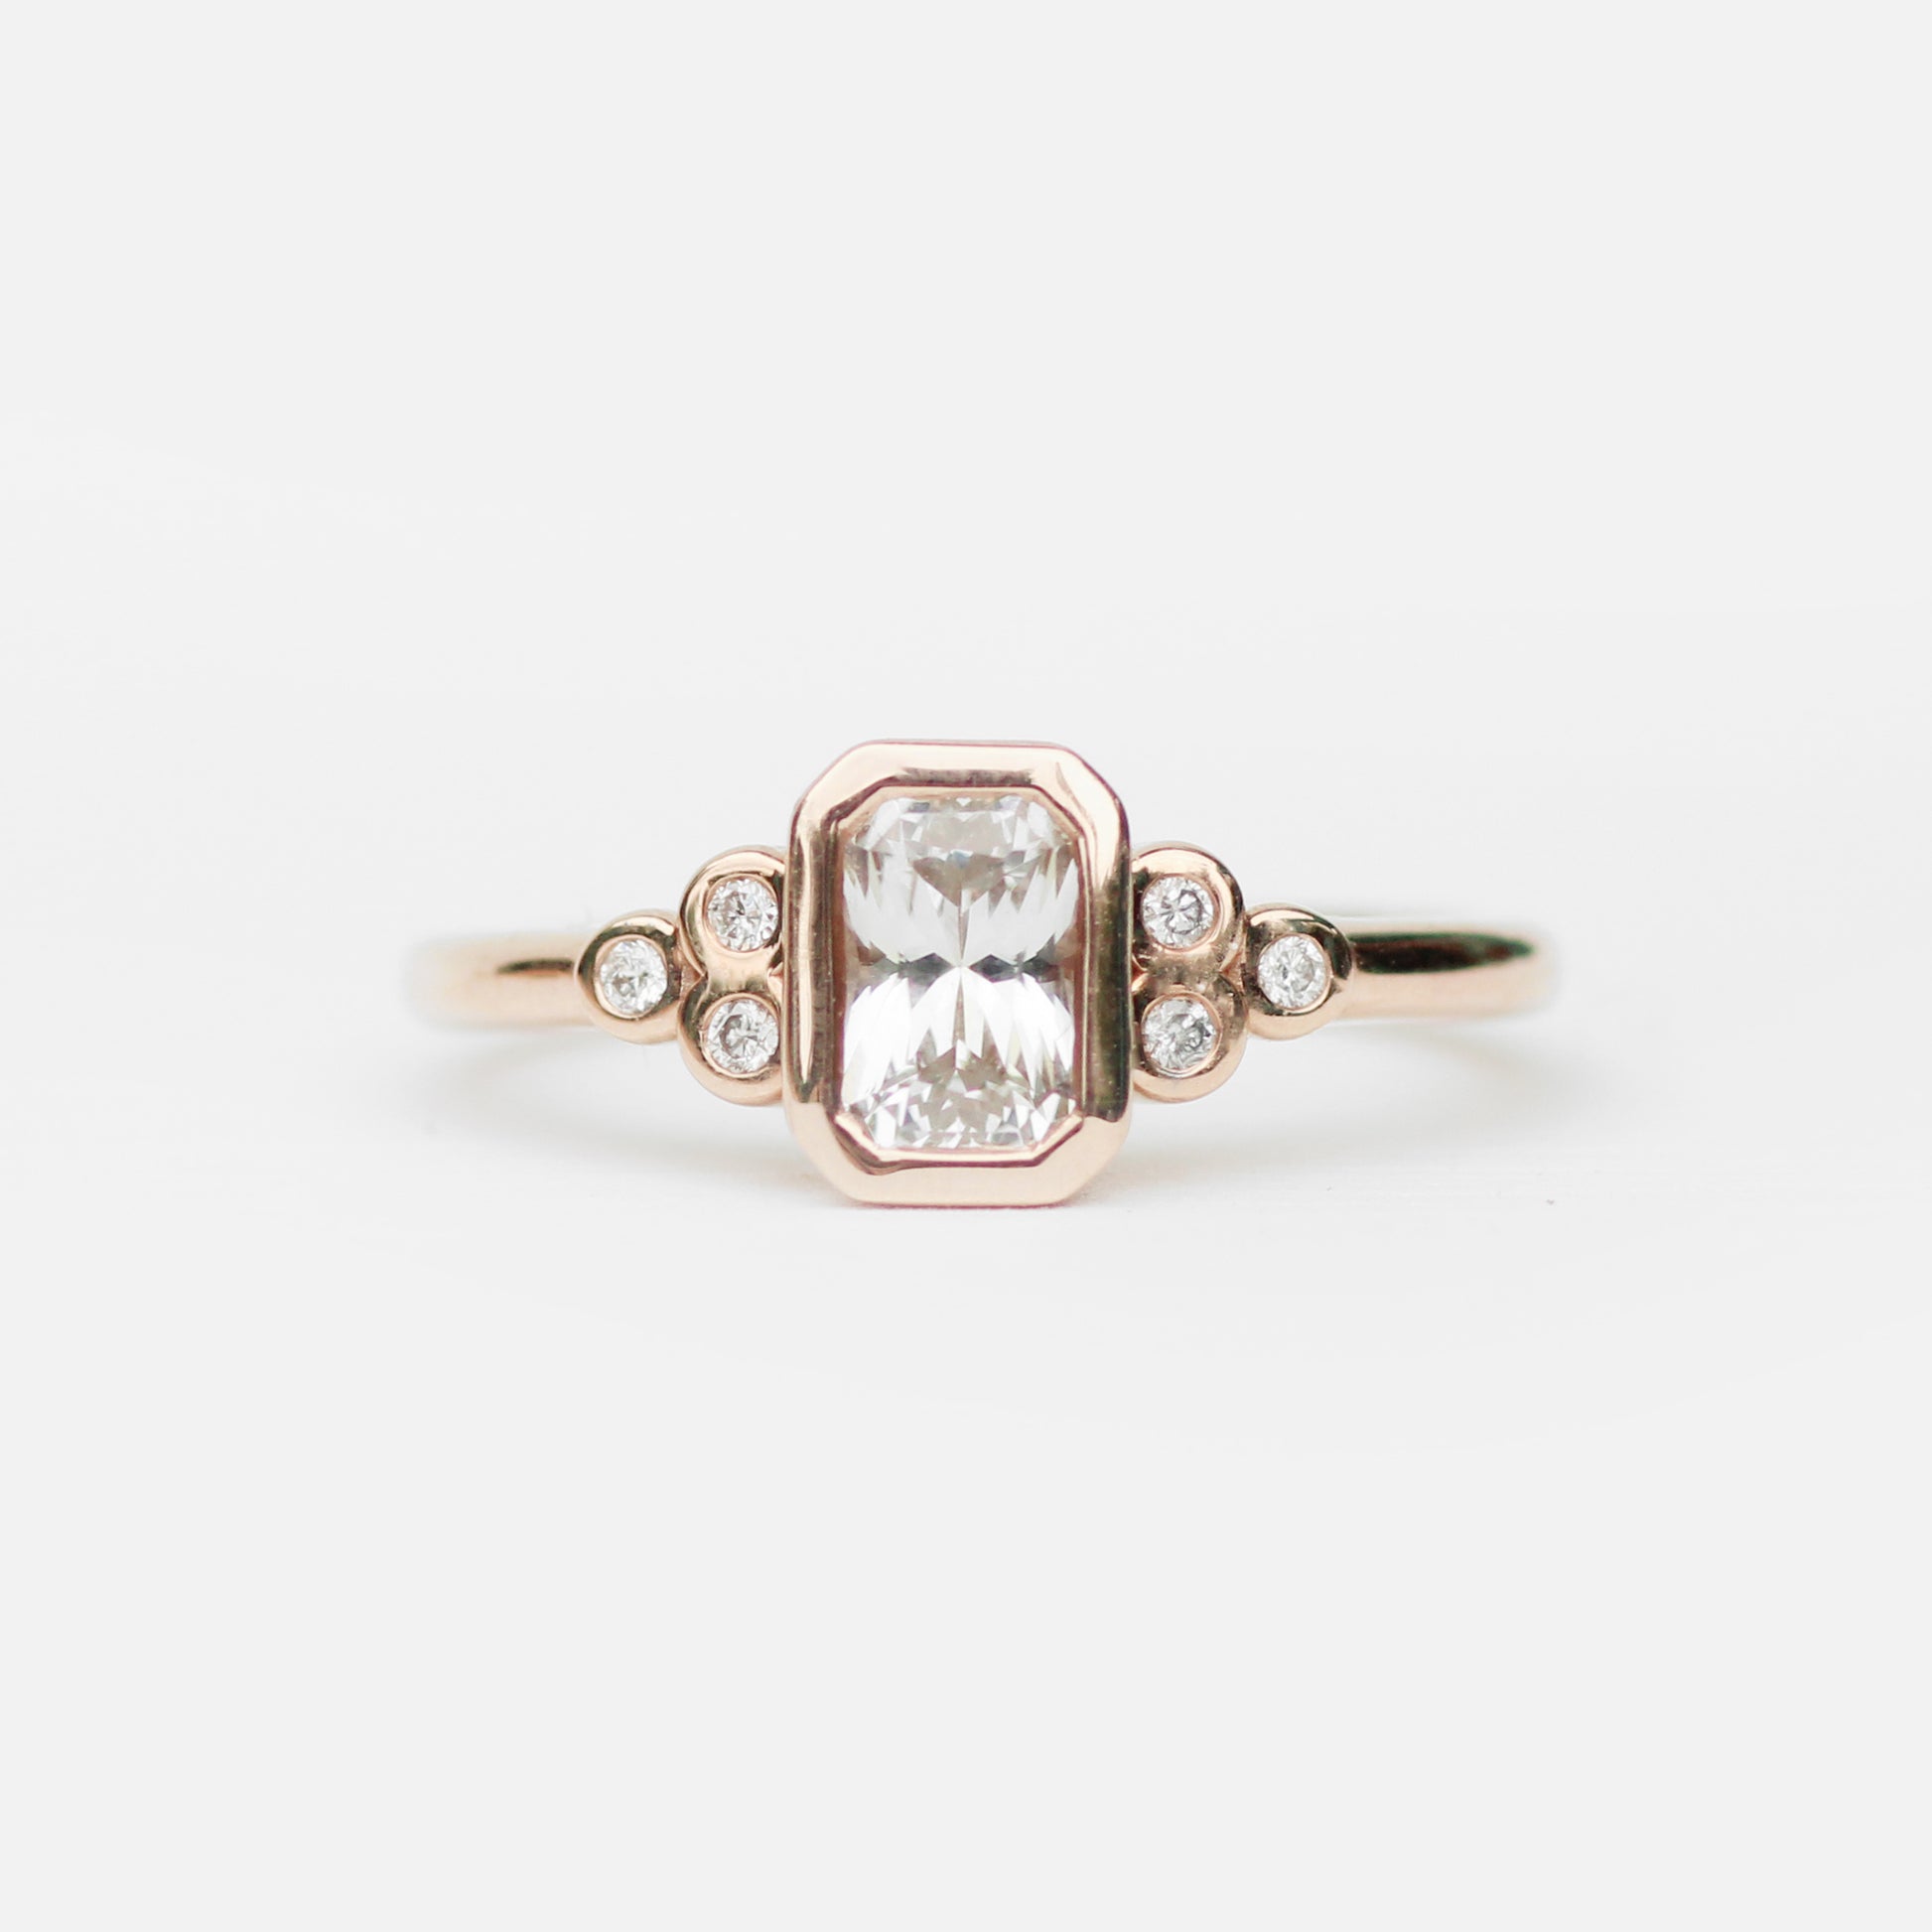 Sophia Diamond Engagement Ring (3 Carat) -18k White Gold